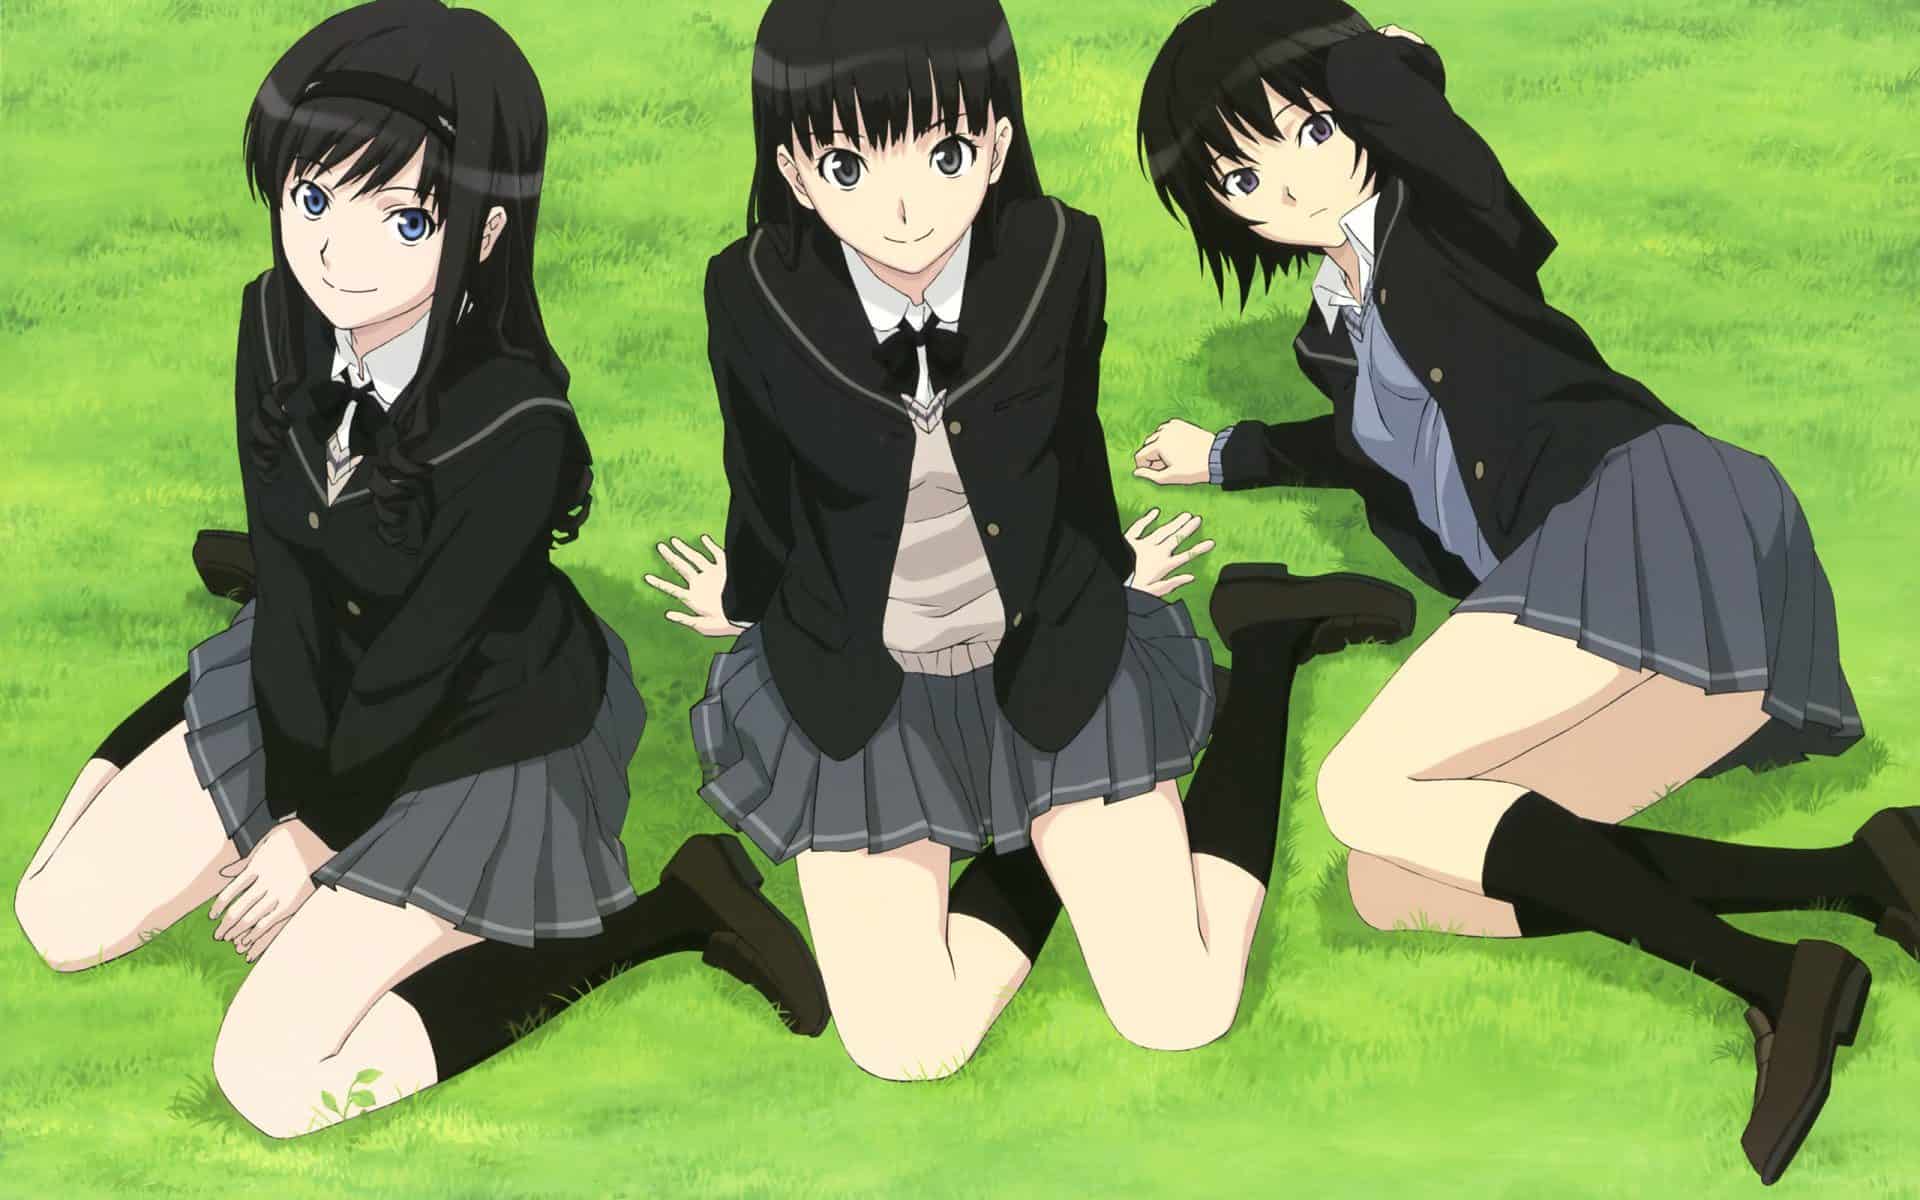 Three girls in school uniform posing on a grass field.